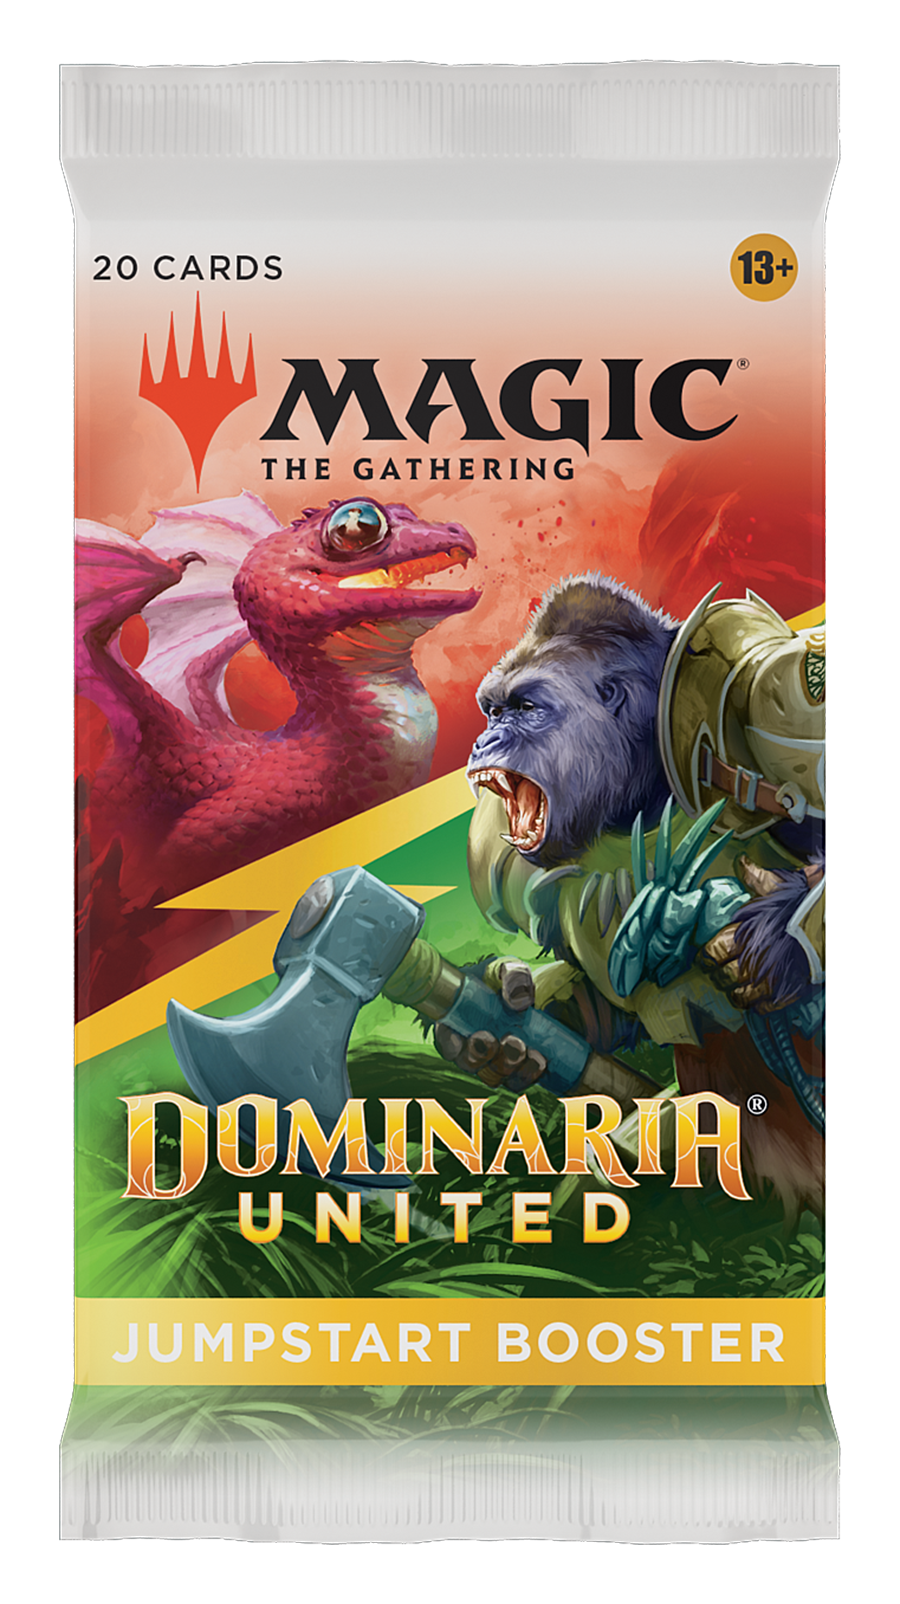 Magic: The Gathering Dominaria United Jumpstart Booster | 20 Magic Cards